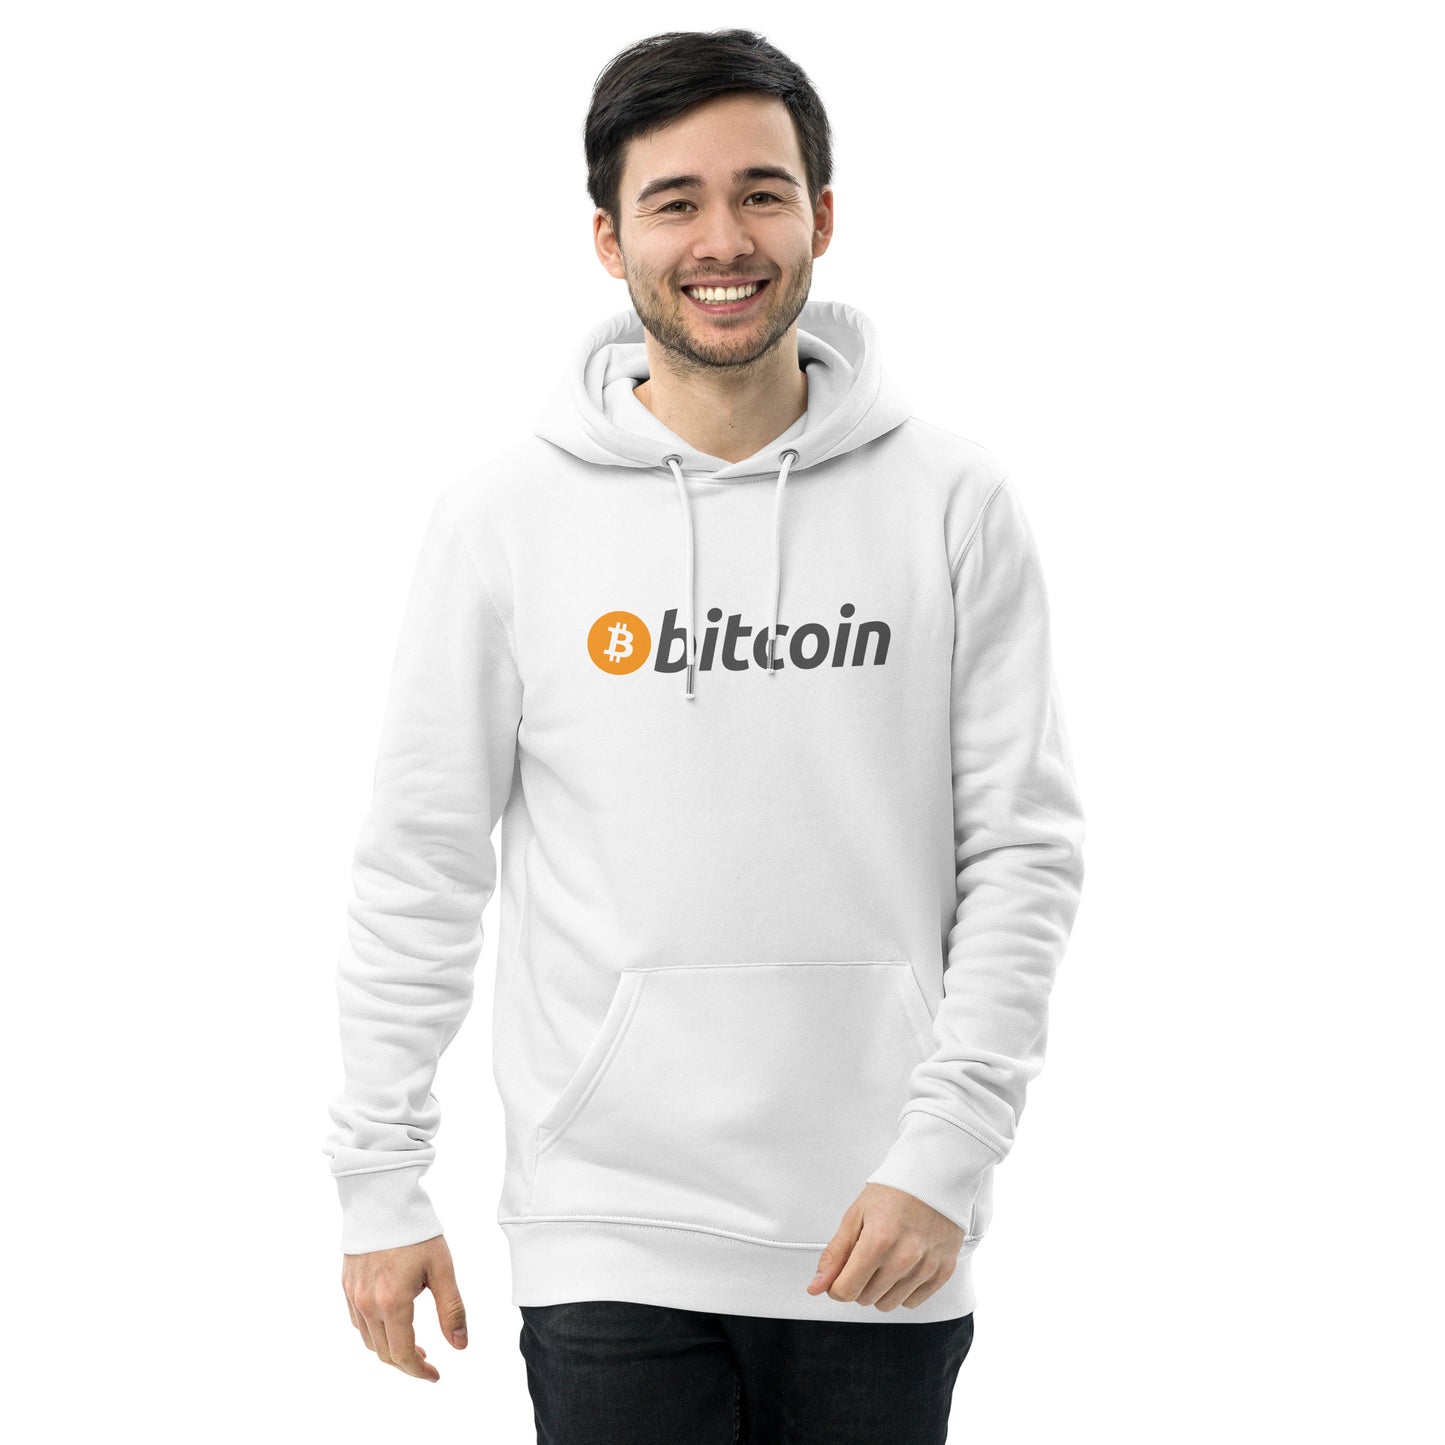 Bitcoin logo and text